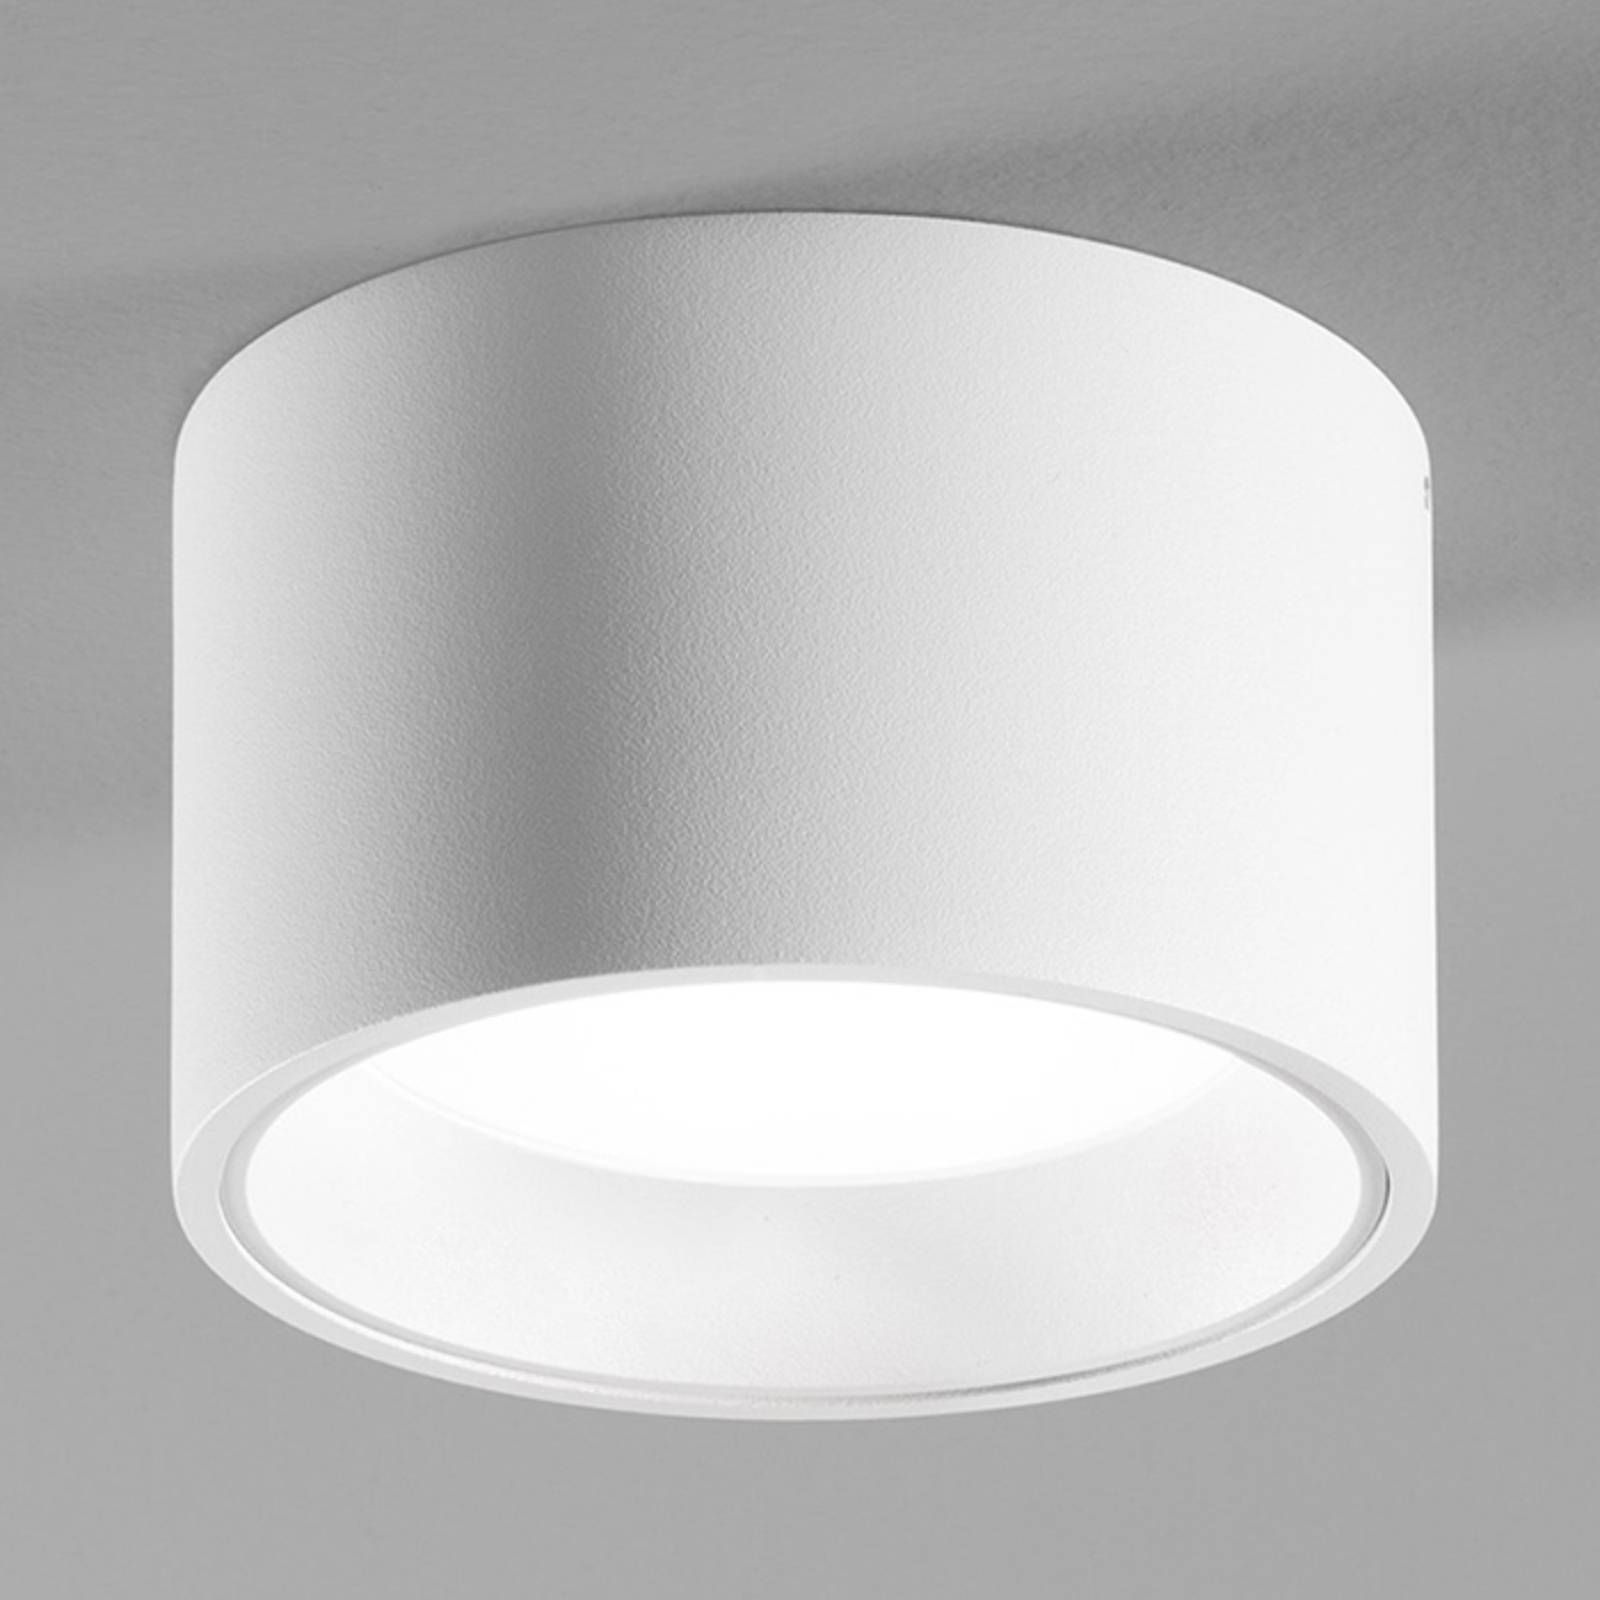 Egger Licht Biele stropné LED svietidlo Ringo s IP54, Chodba, hliník, akryl, 14W, K: 7.5cm